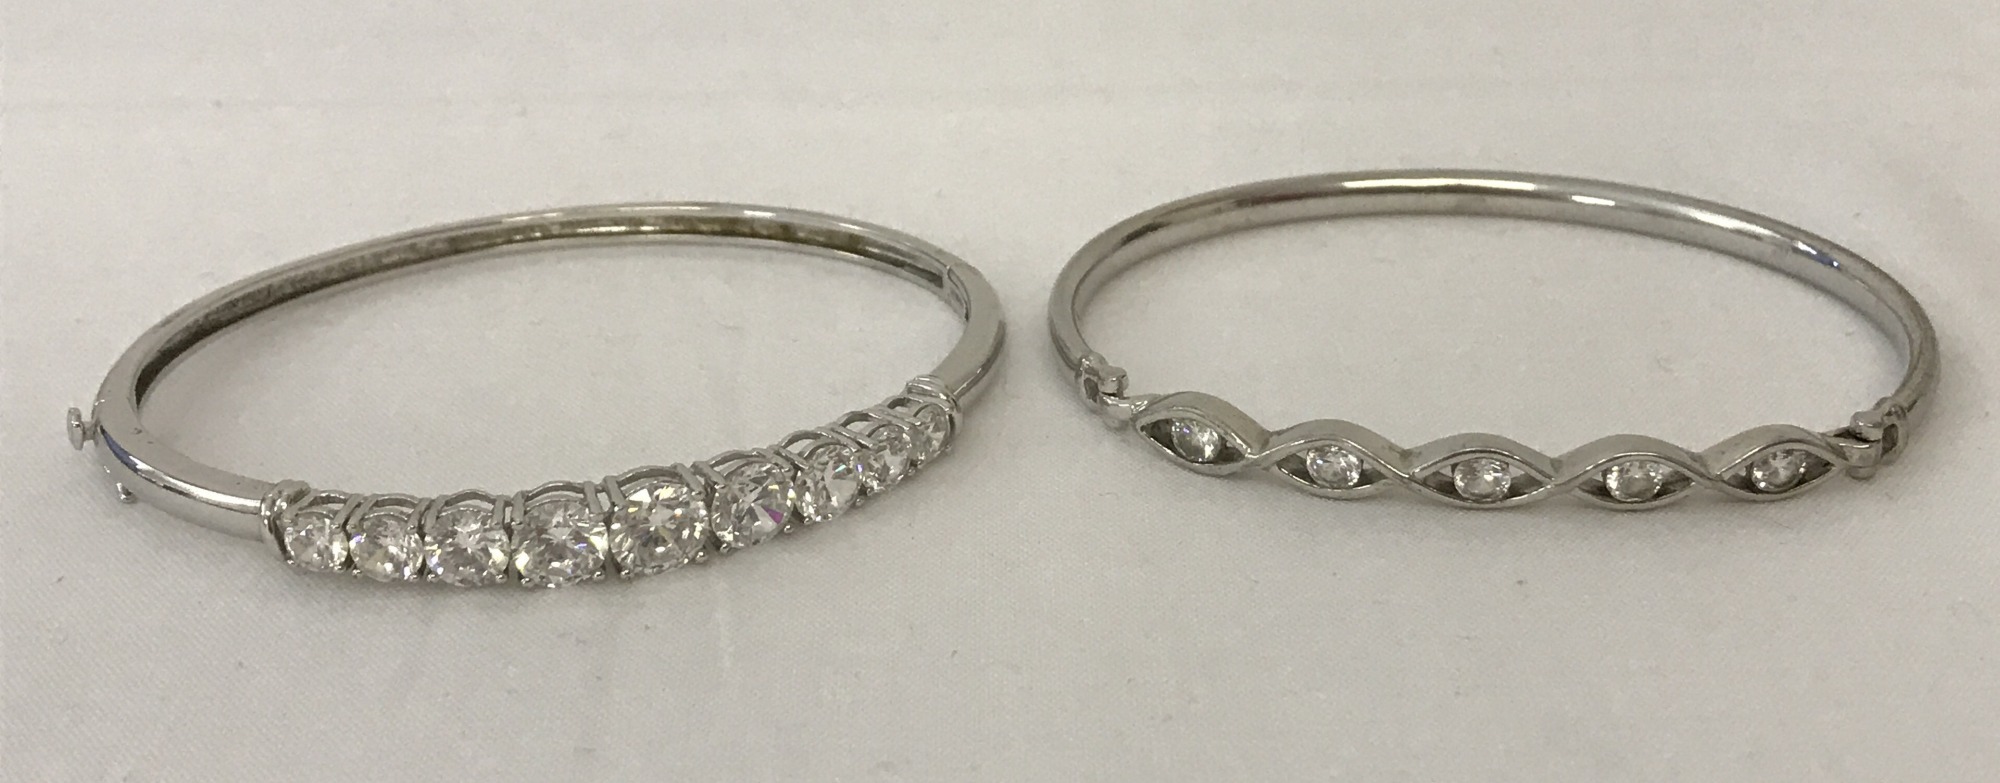 2 ladies silver bangles both set with cubic zirconia stones.